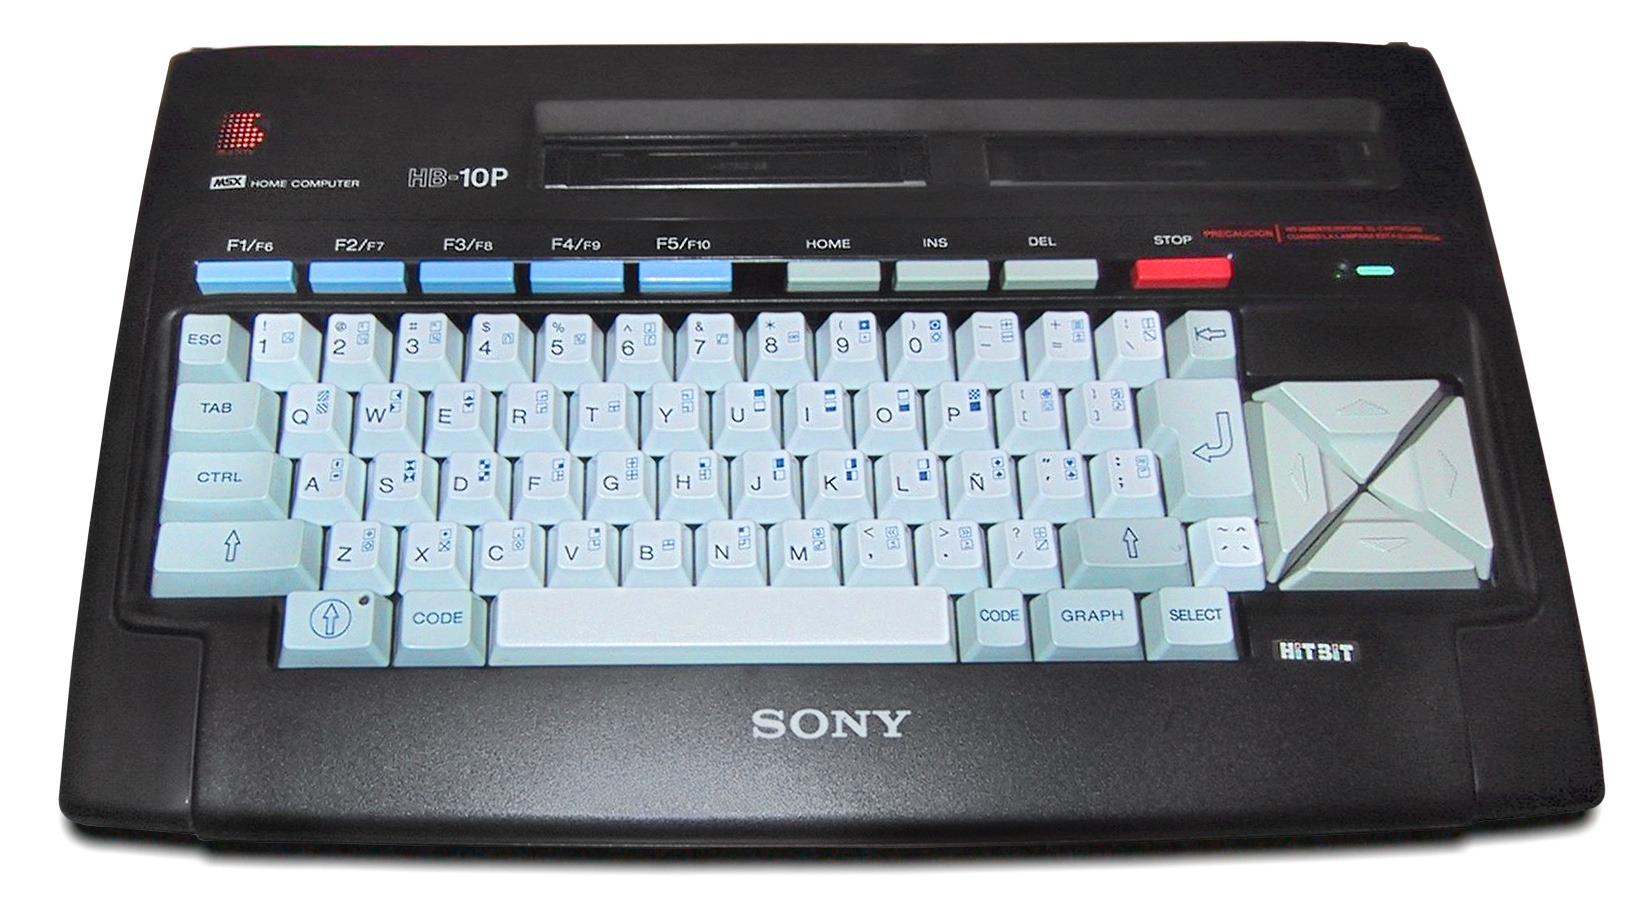 Sony HitBit MSX-kompatibel datamaskin. Foto: Doppelgangland